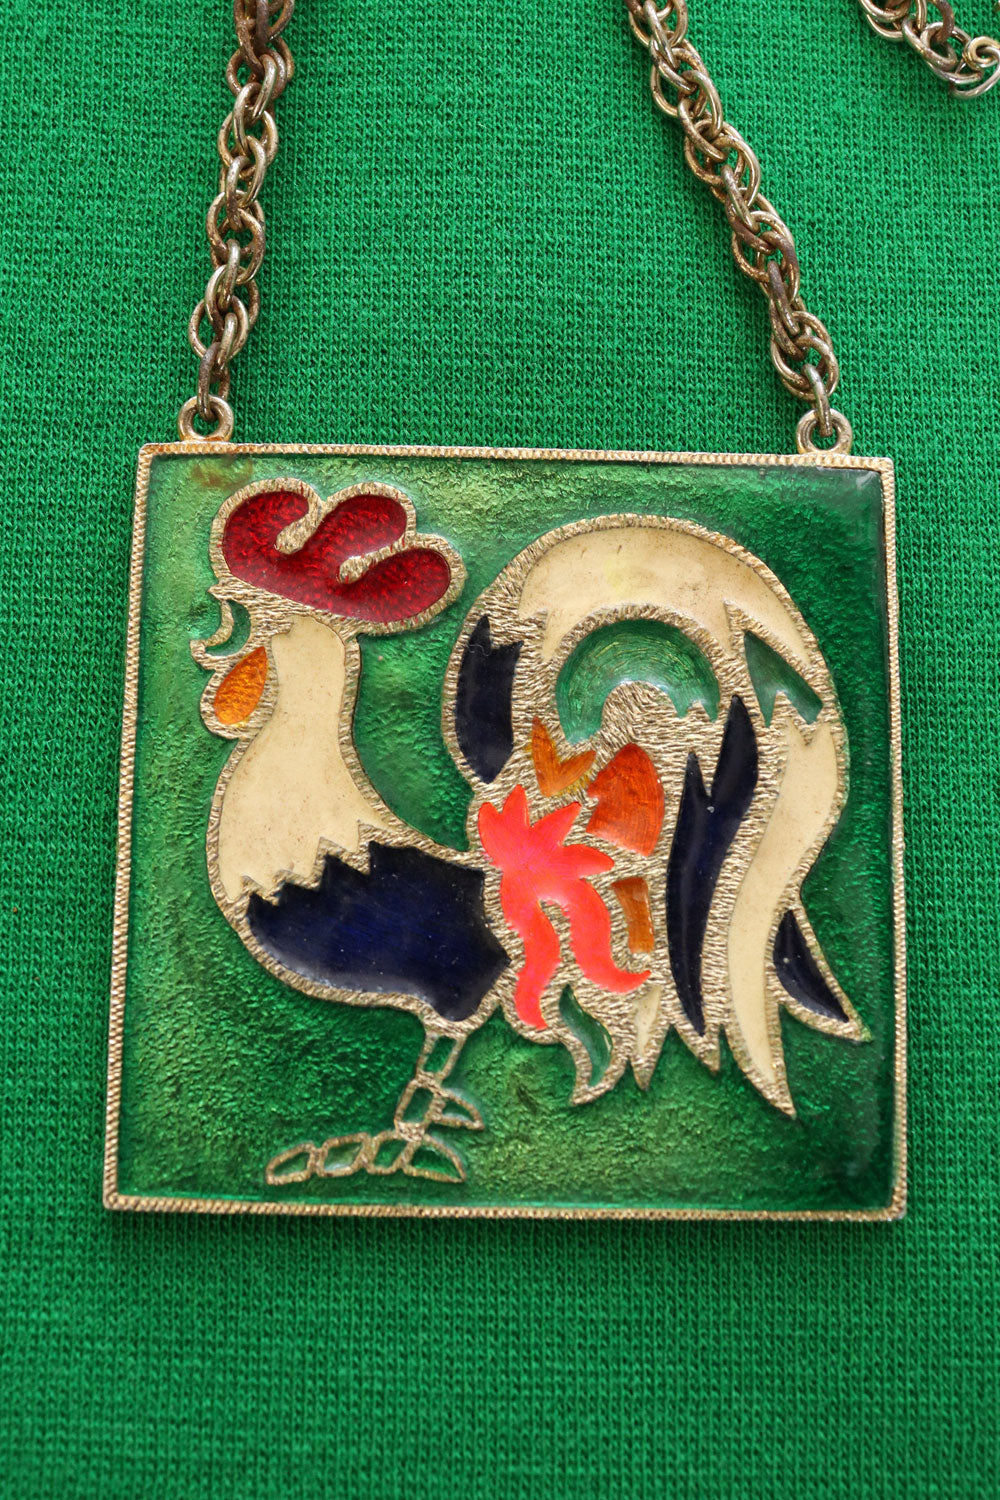 Vendome 1960s Rooster Enamel Necklace